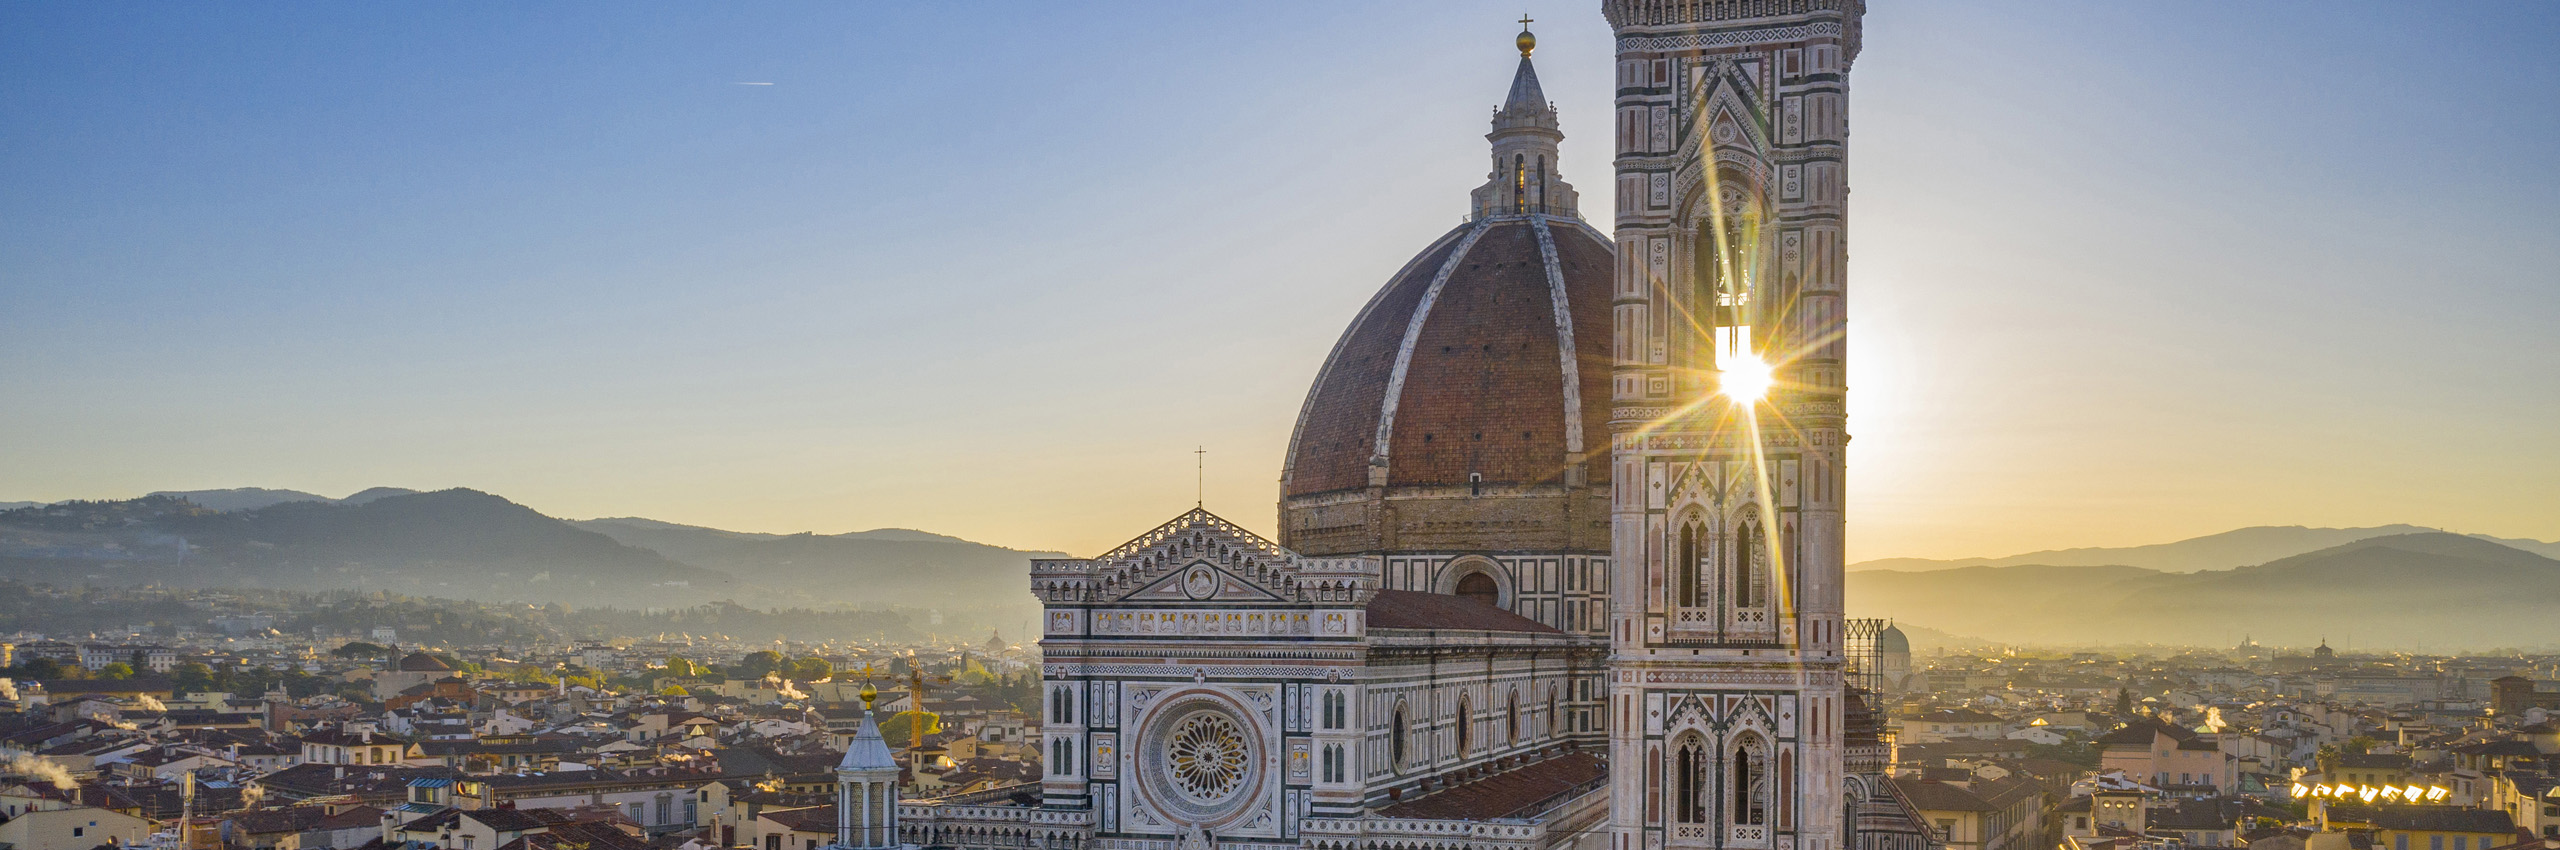 SIM-1145598 | Italy/Tuscany, Firenze district, Florence, Duomo Santa Maria del Fiore | © Massimo Ripani/SIME